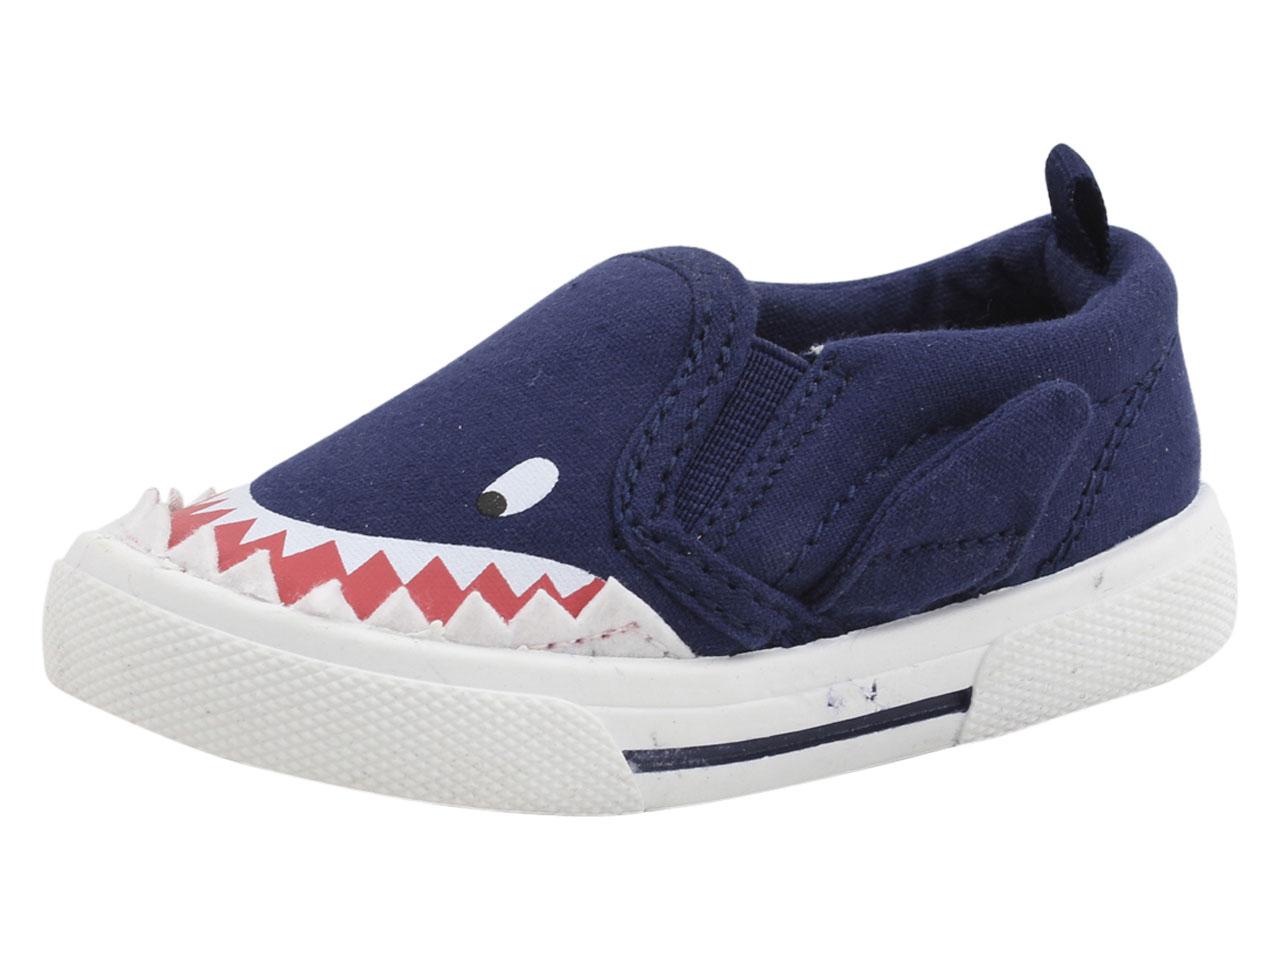 Indigo Shark Loafers Shoes Sz. 5T 